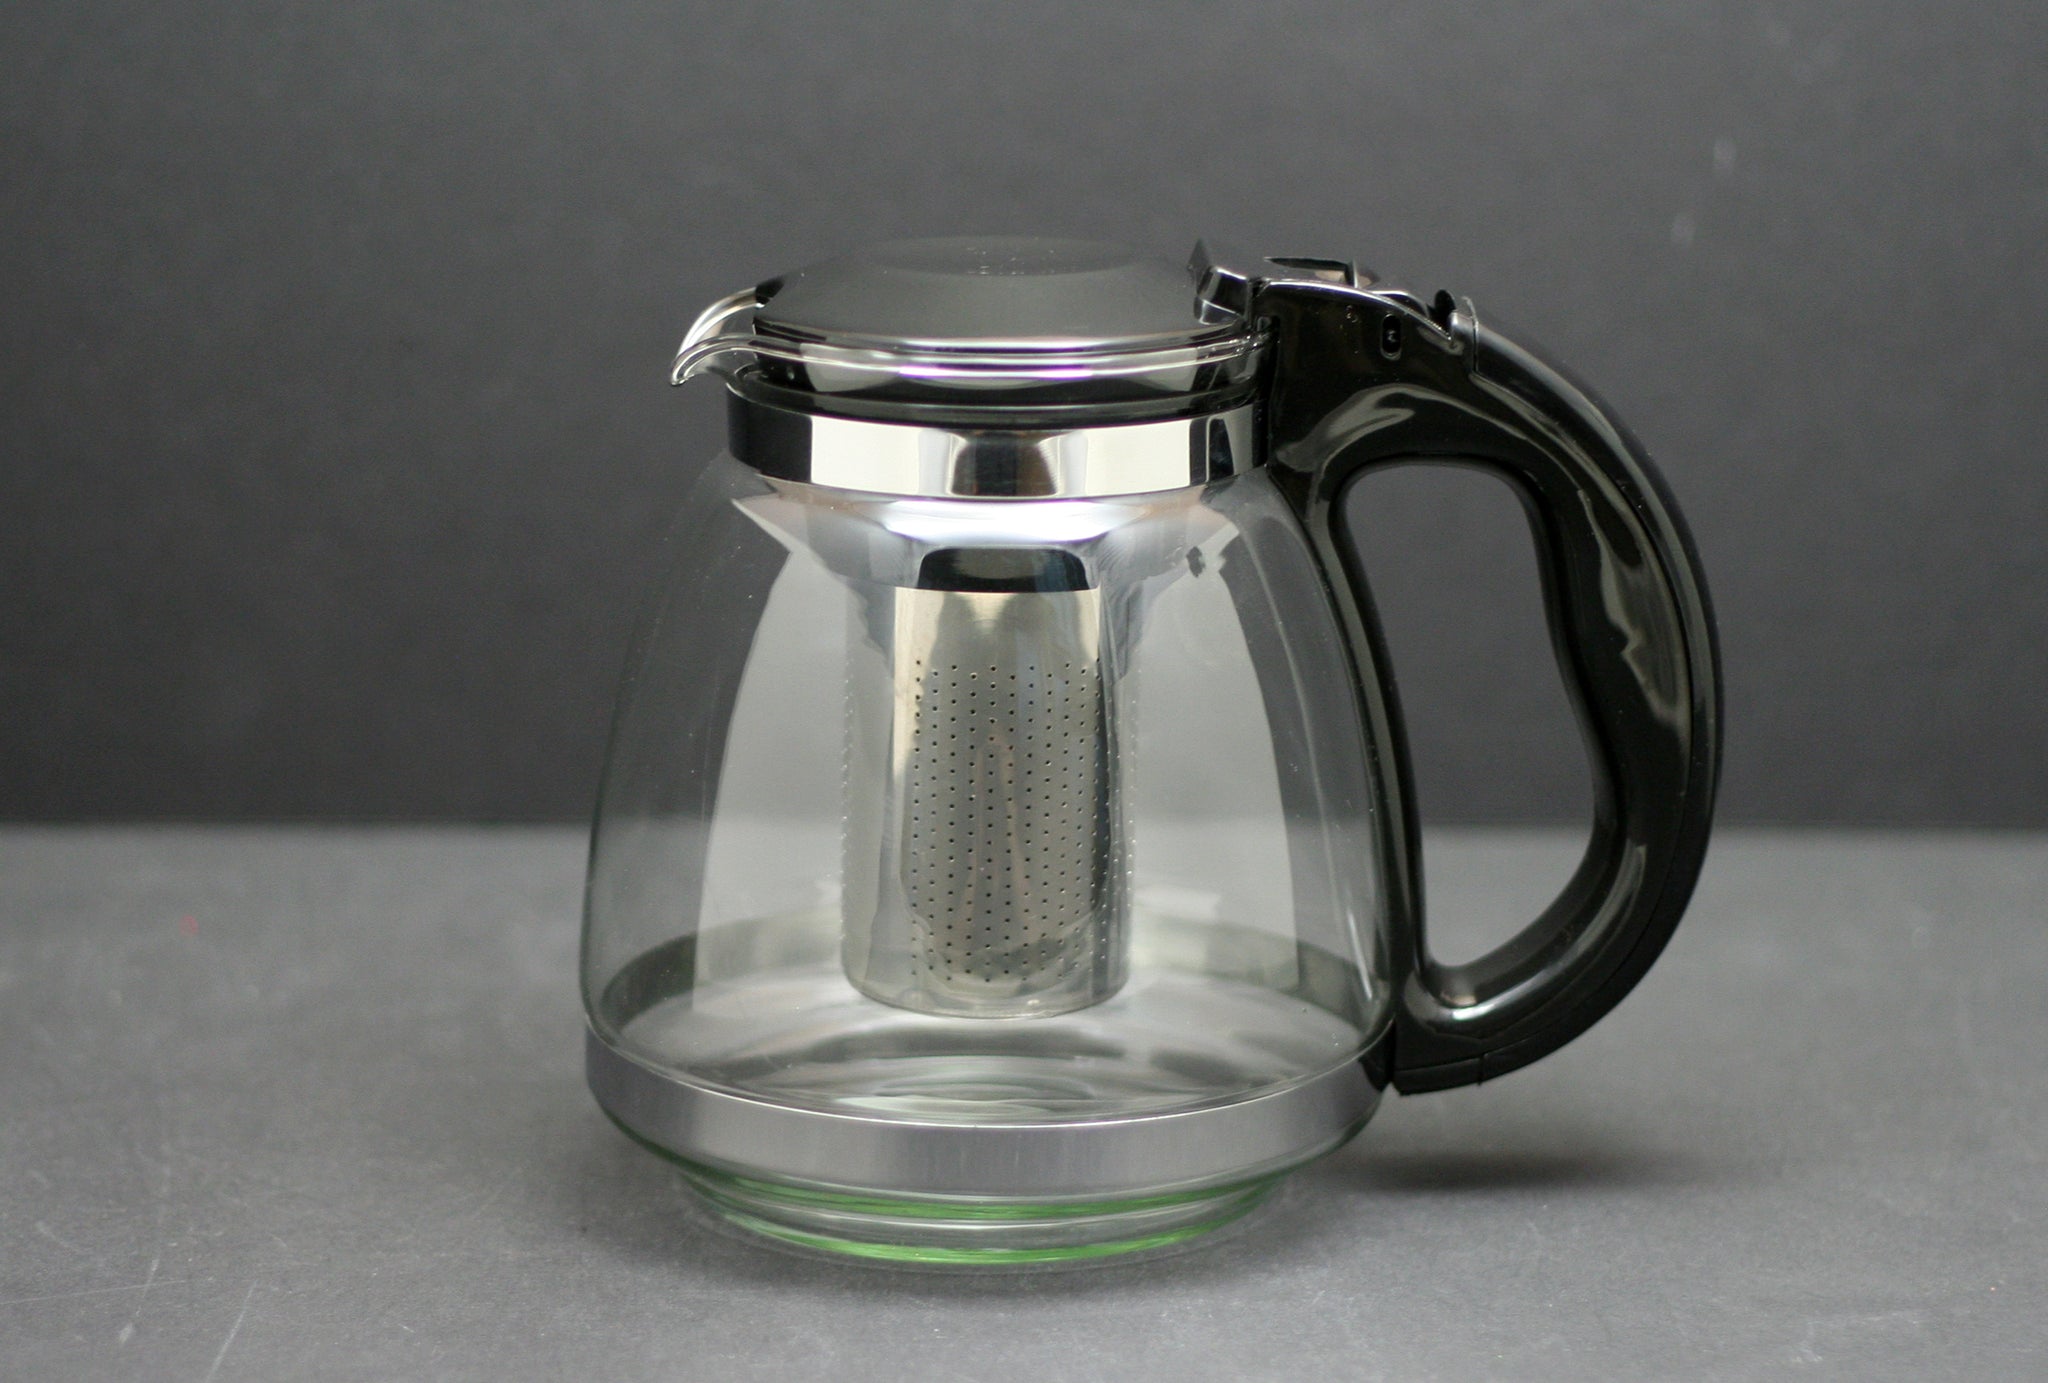 Glass Teapot – Black, S/S Infuser 1500 ml